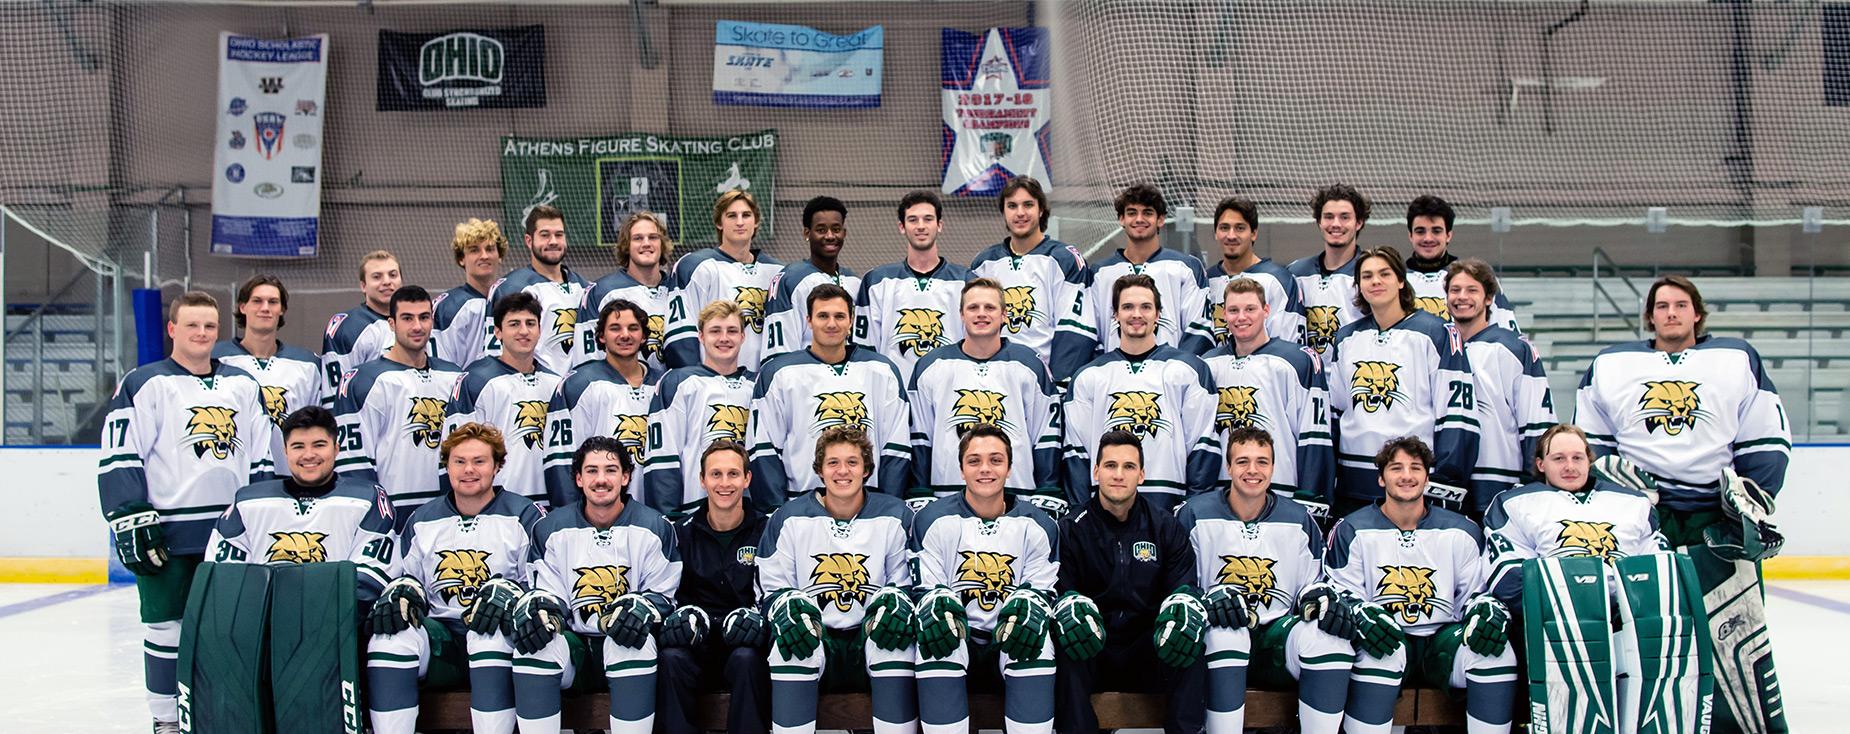 Group photo of 2021 hockey team players